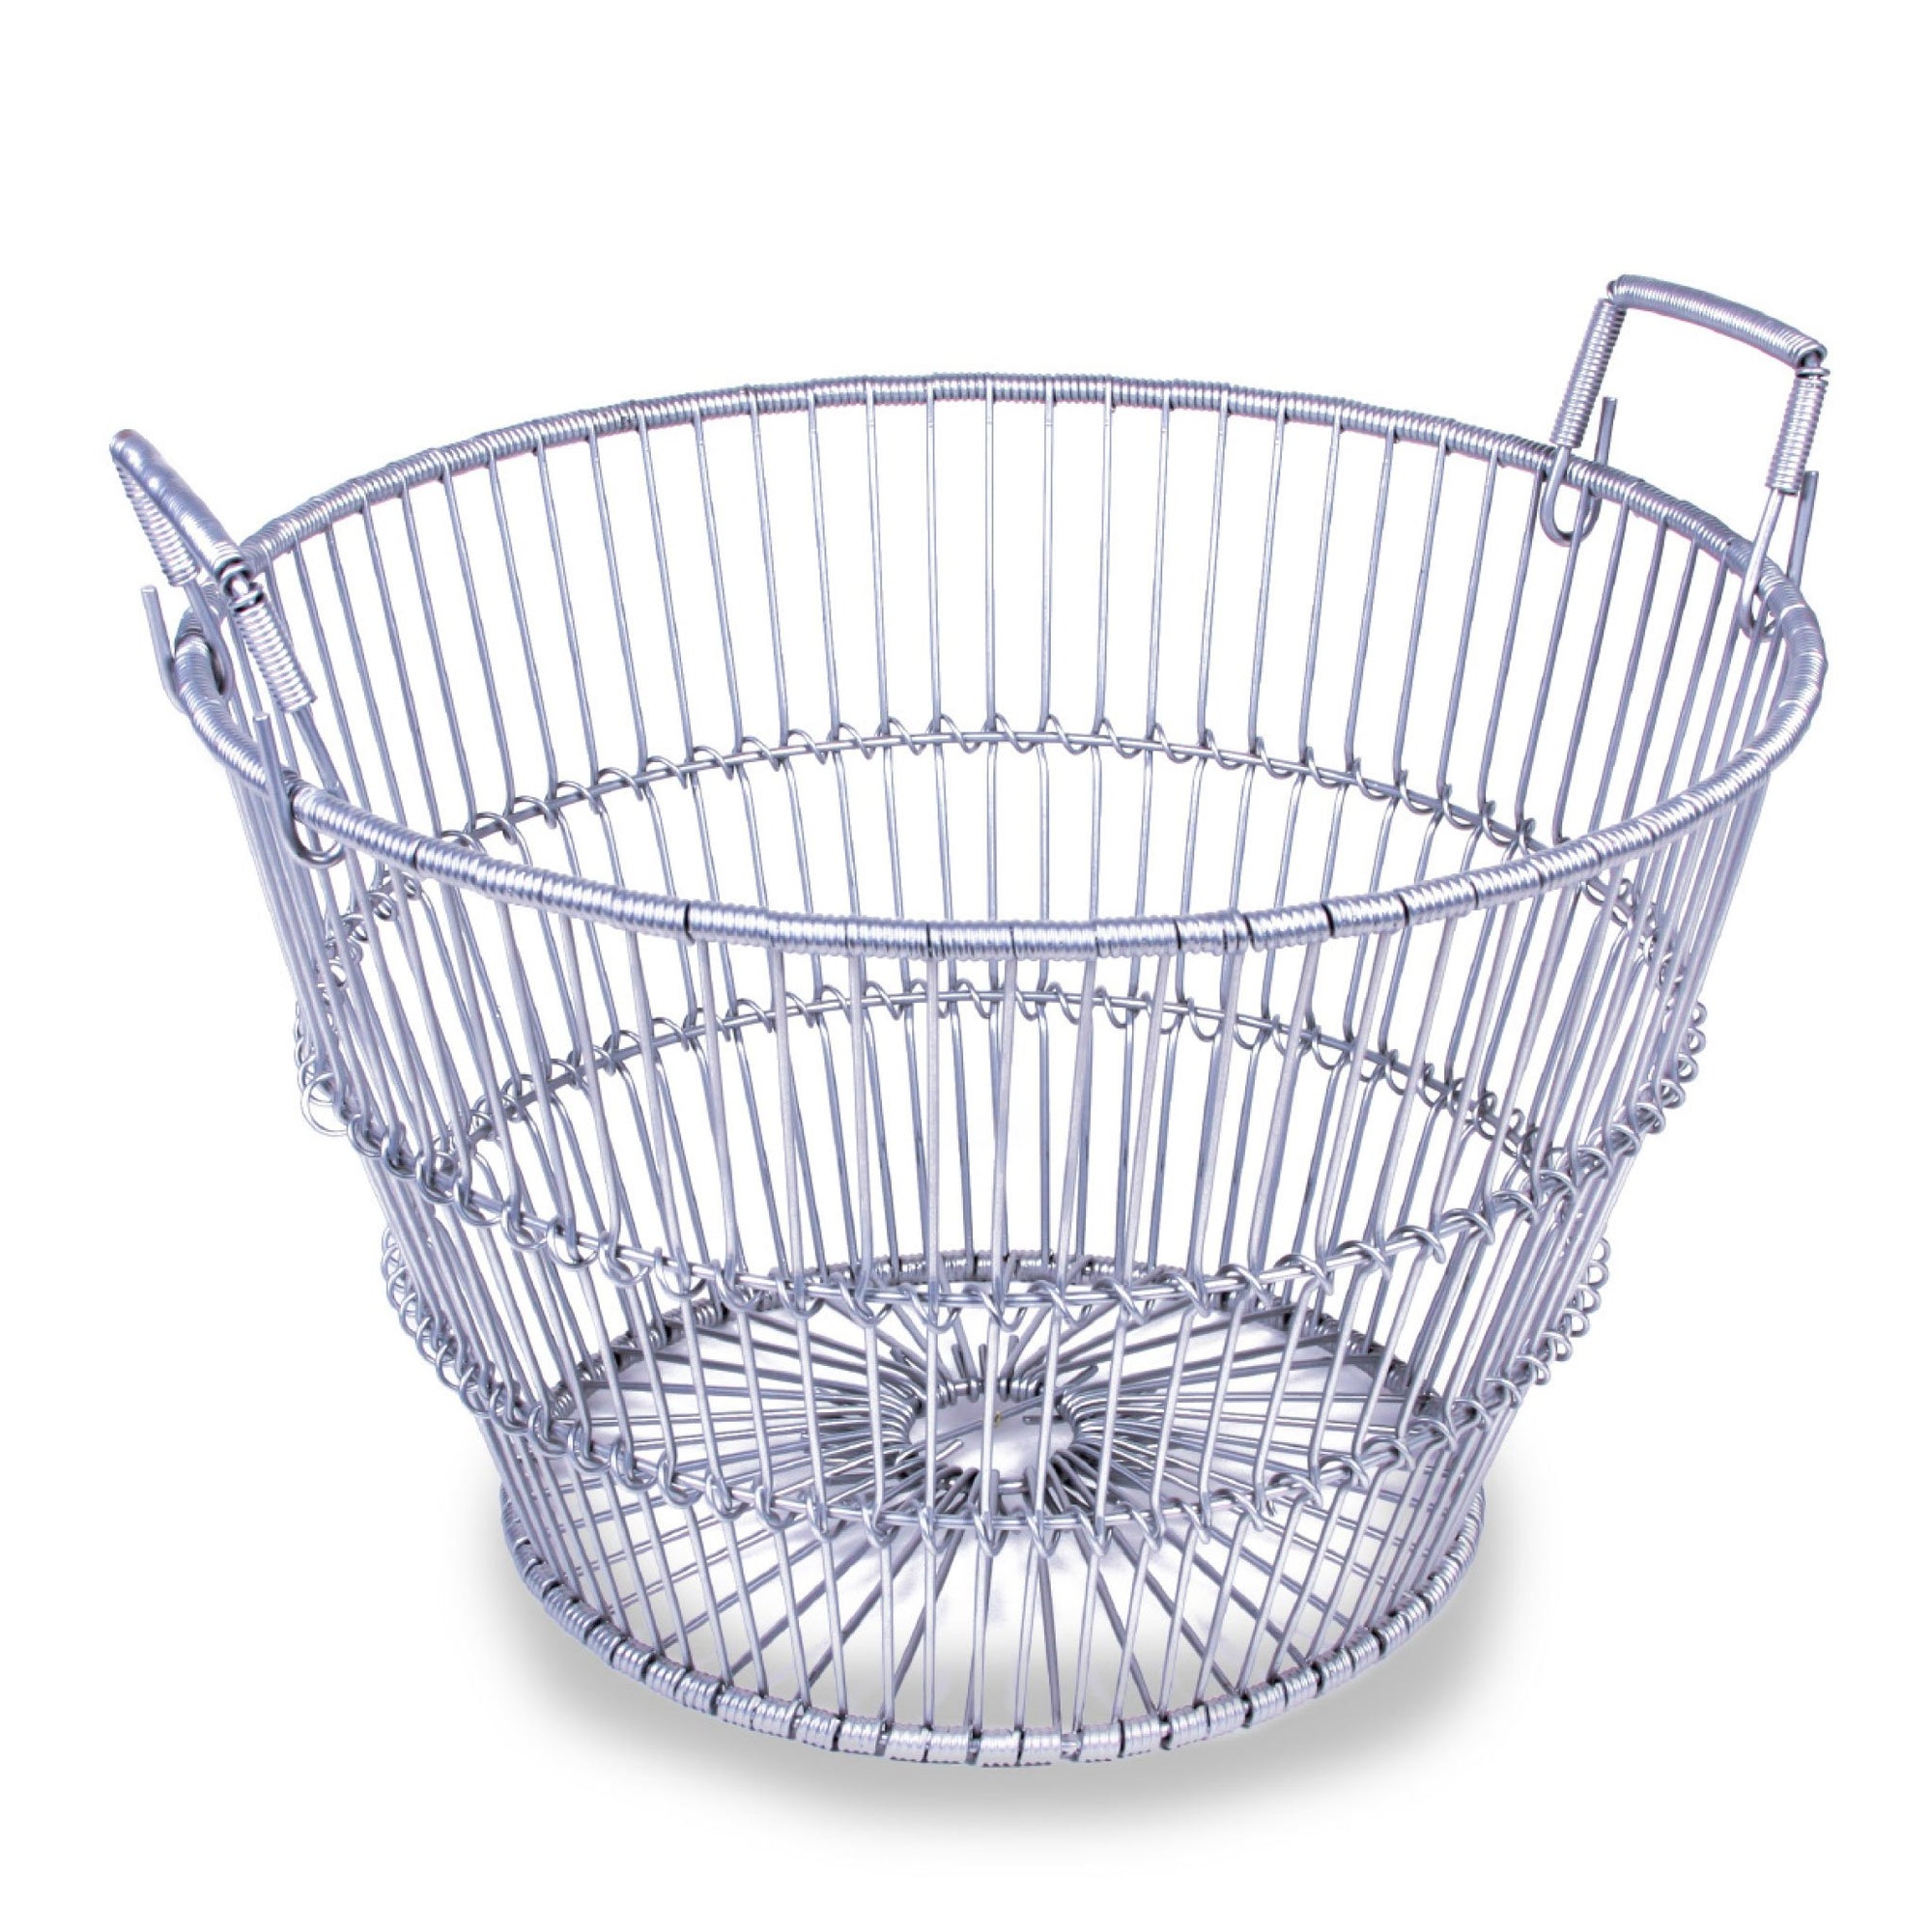 Bushel Clam Basket       (Bushel)